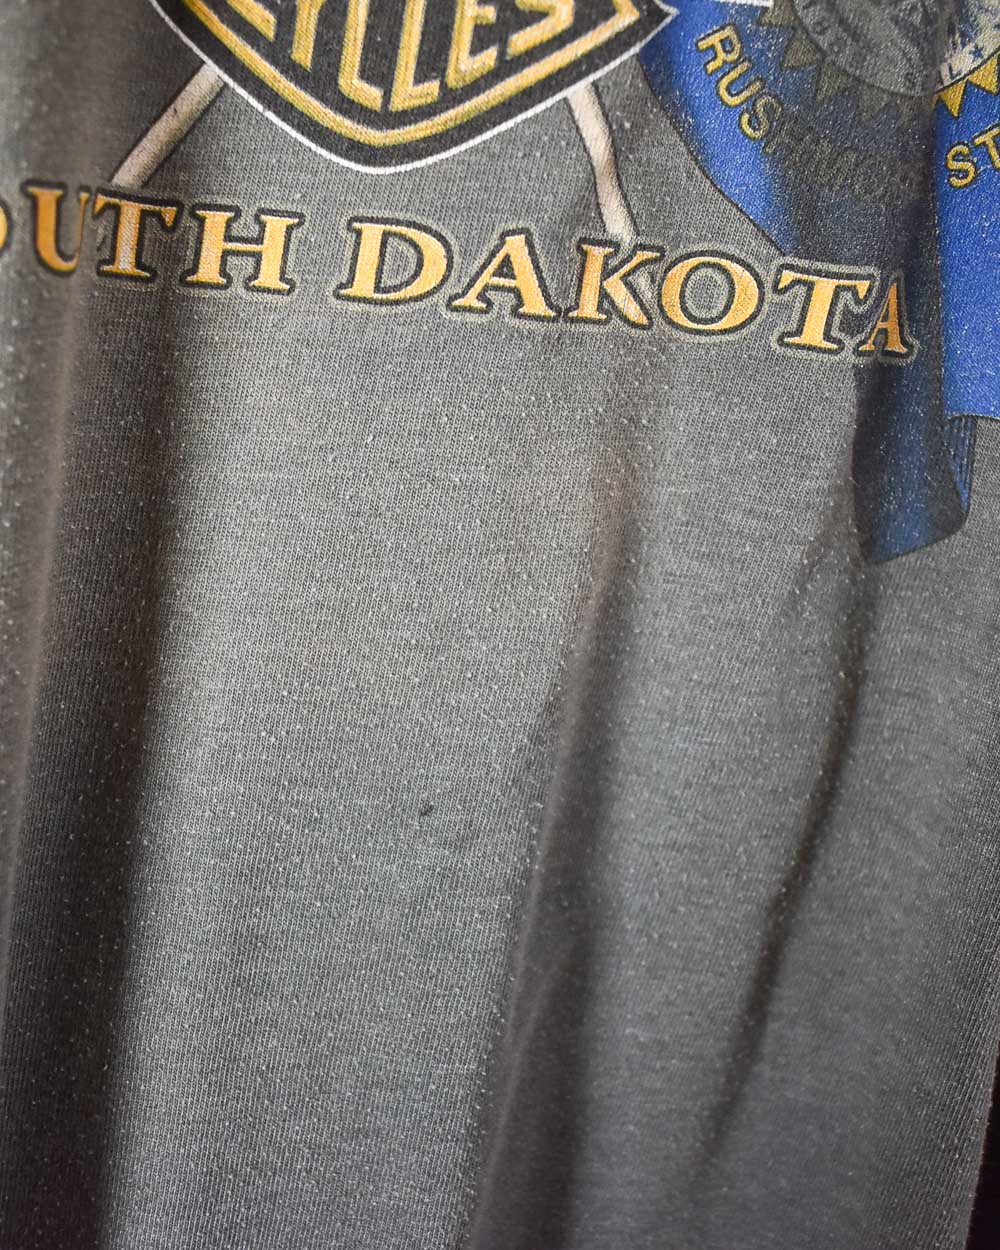 Grey Harley Davidson Sturgis South Dakota Graphic T-Shirt - XX-Large